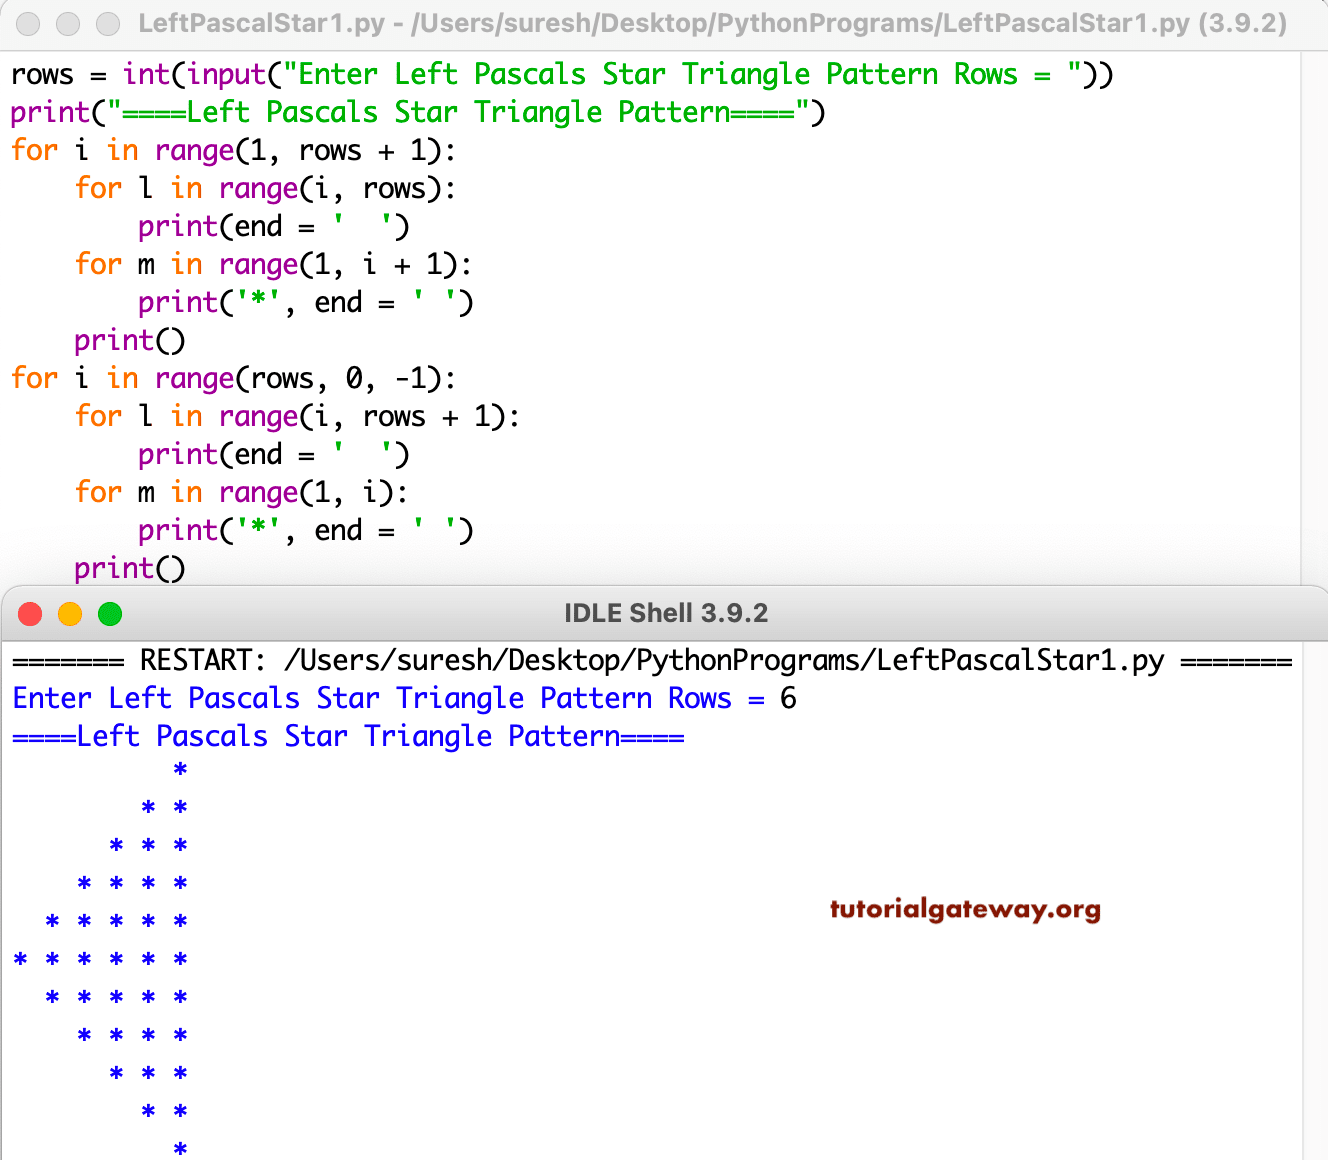 Python Program to Print Left Pascals Star Triangle